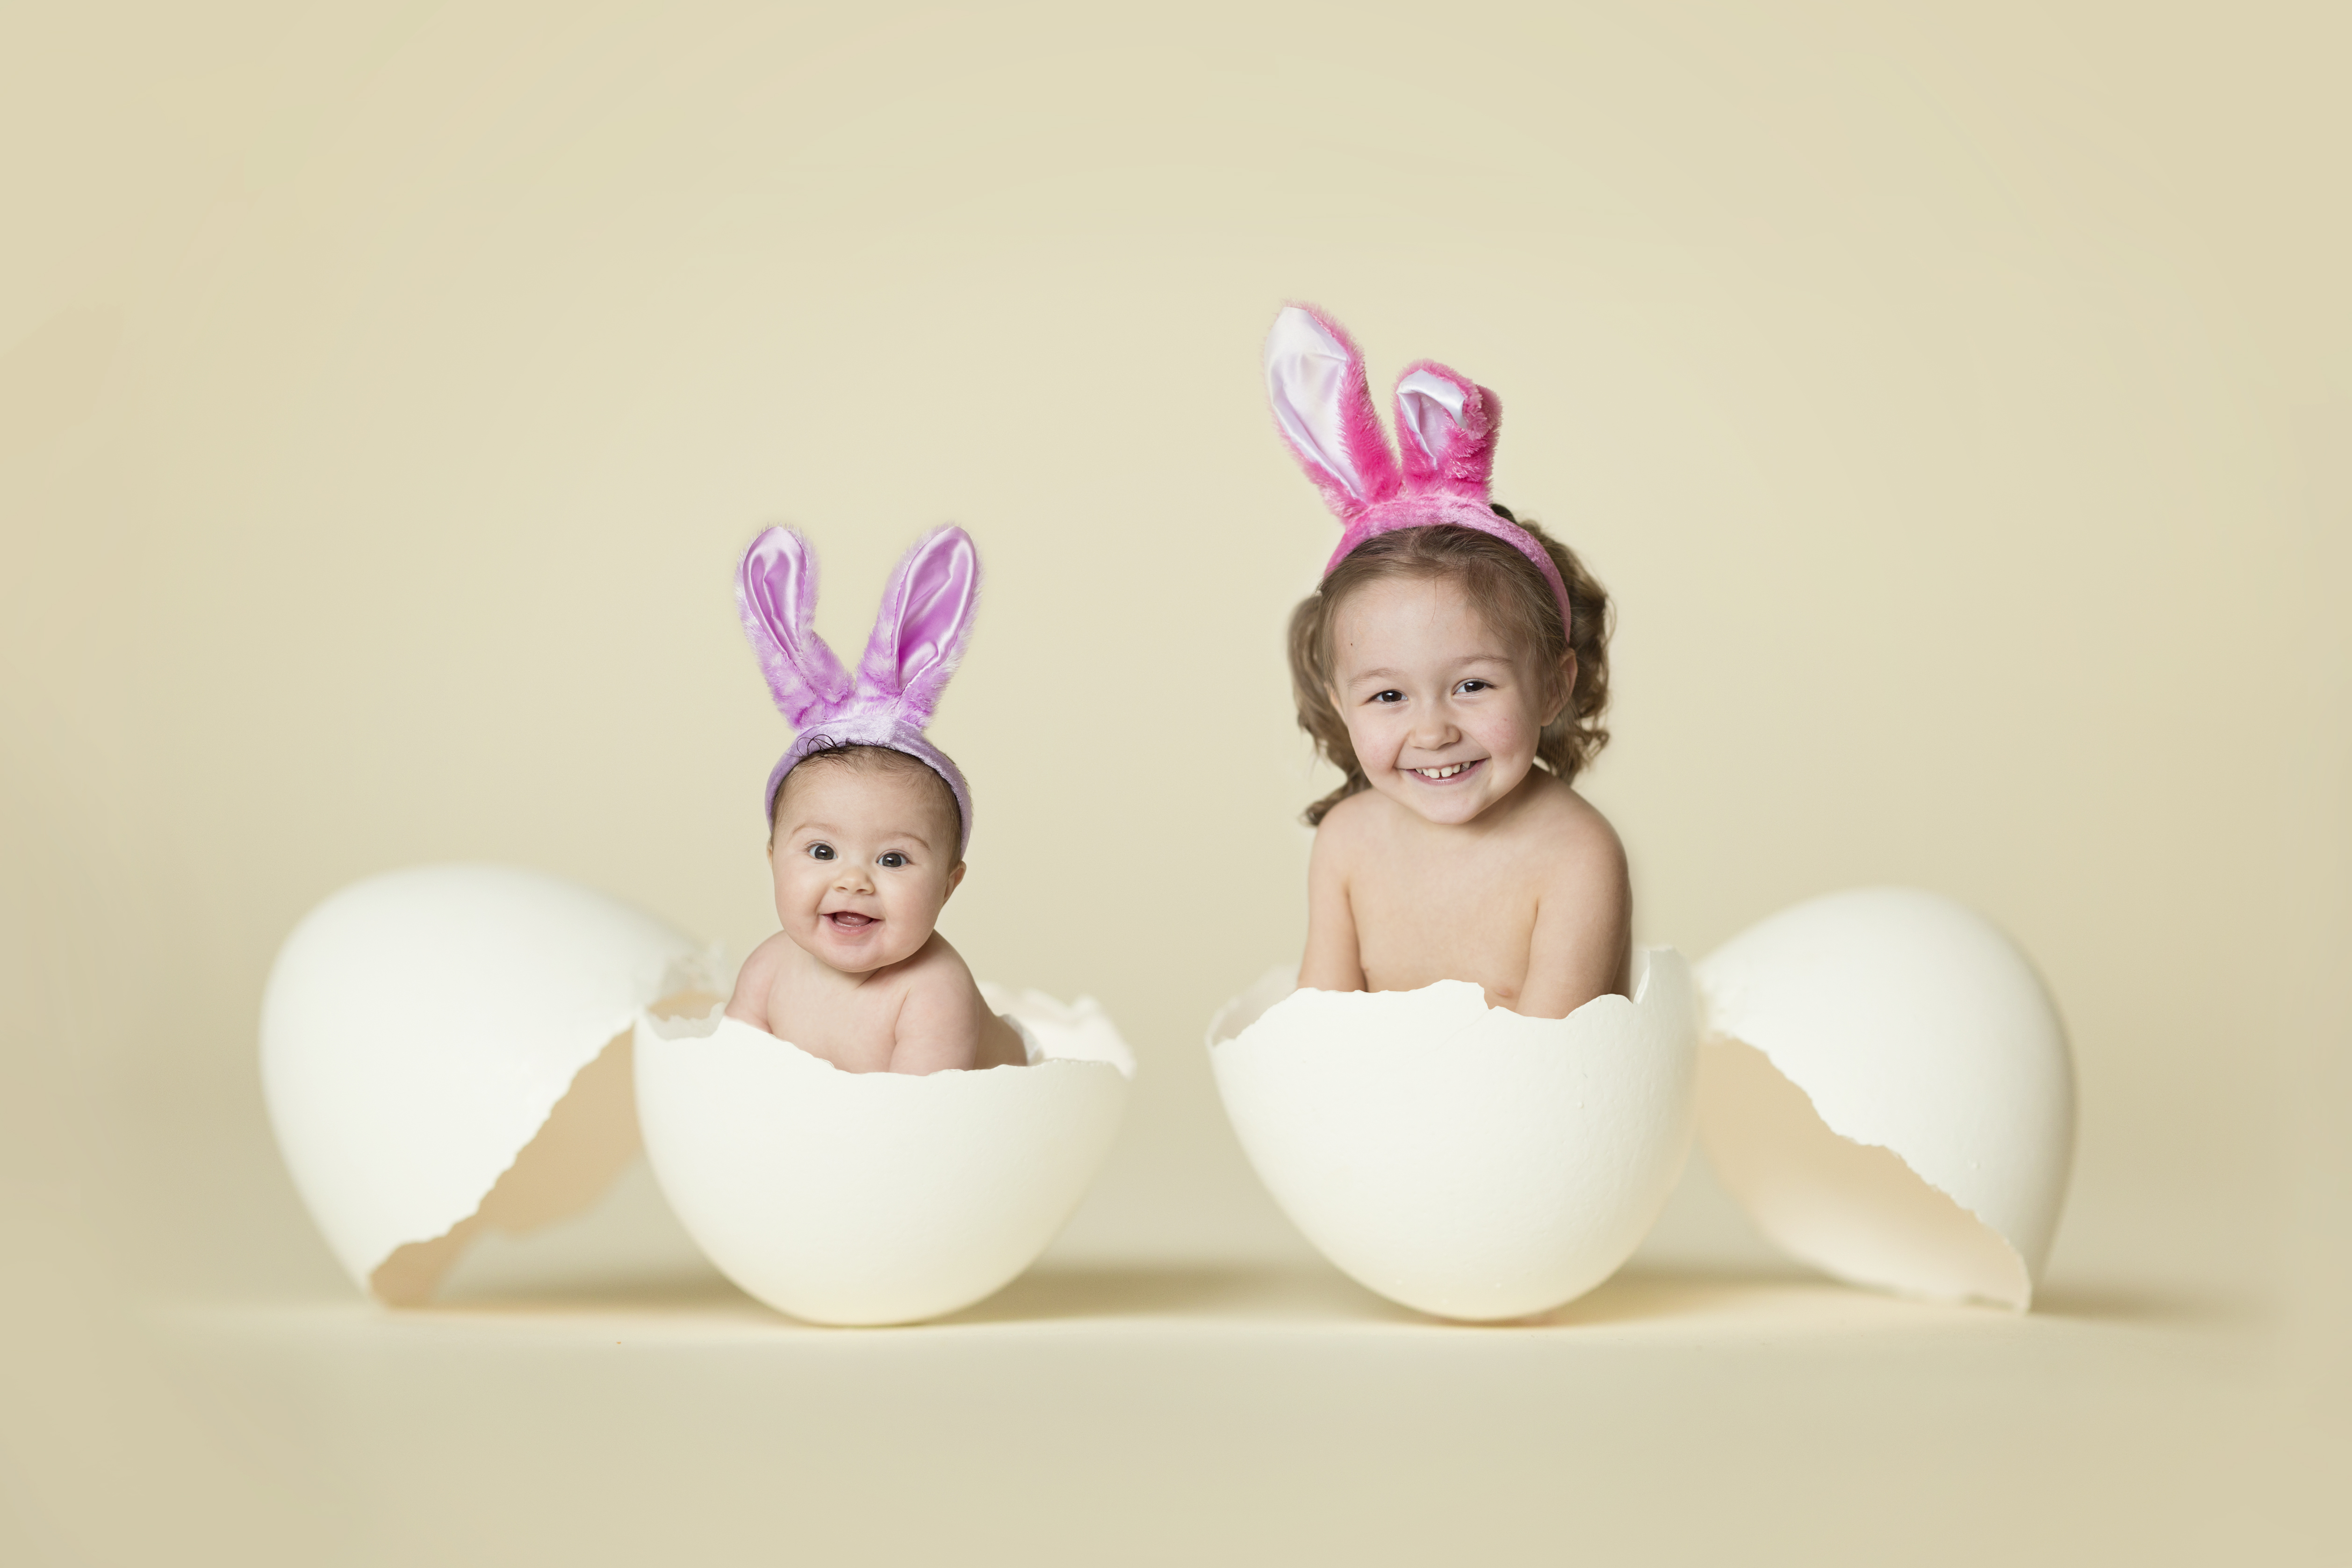 Easter-Egg-pic របៀបបង្កើតសកម្មភាពតែងនិពន្ធរូបភាពបែប Easter សម្រាប់ភ្ញៀវអ្នកសរសេរប្លុកព័ត៌មានជំនួយ Photoshop